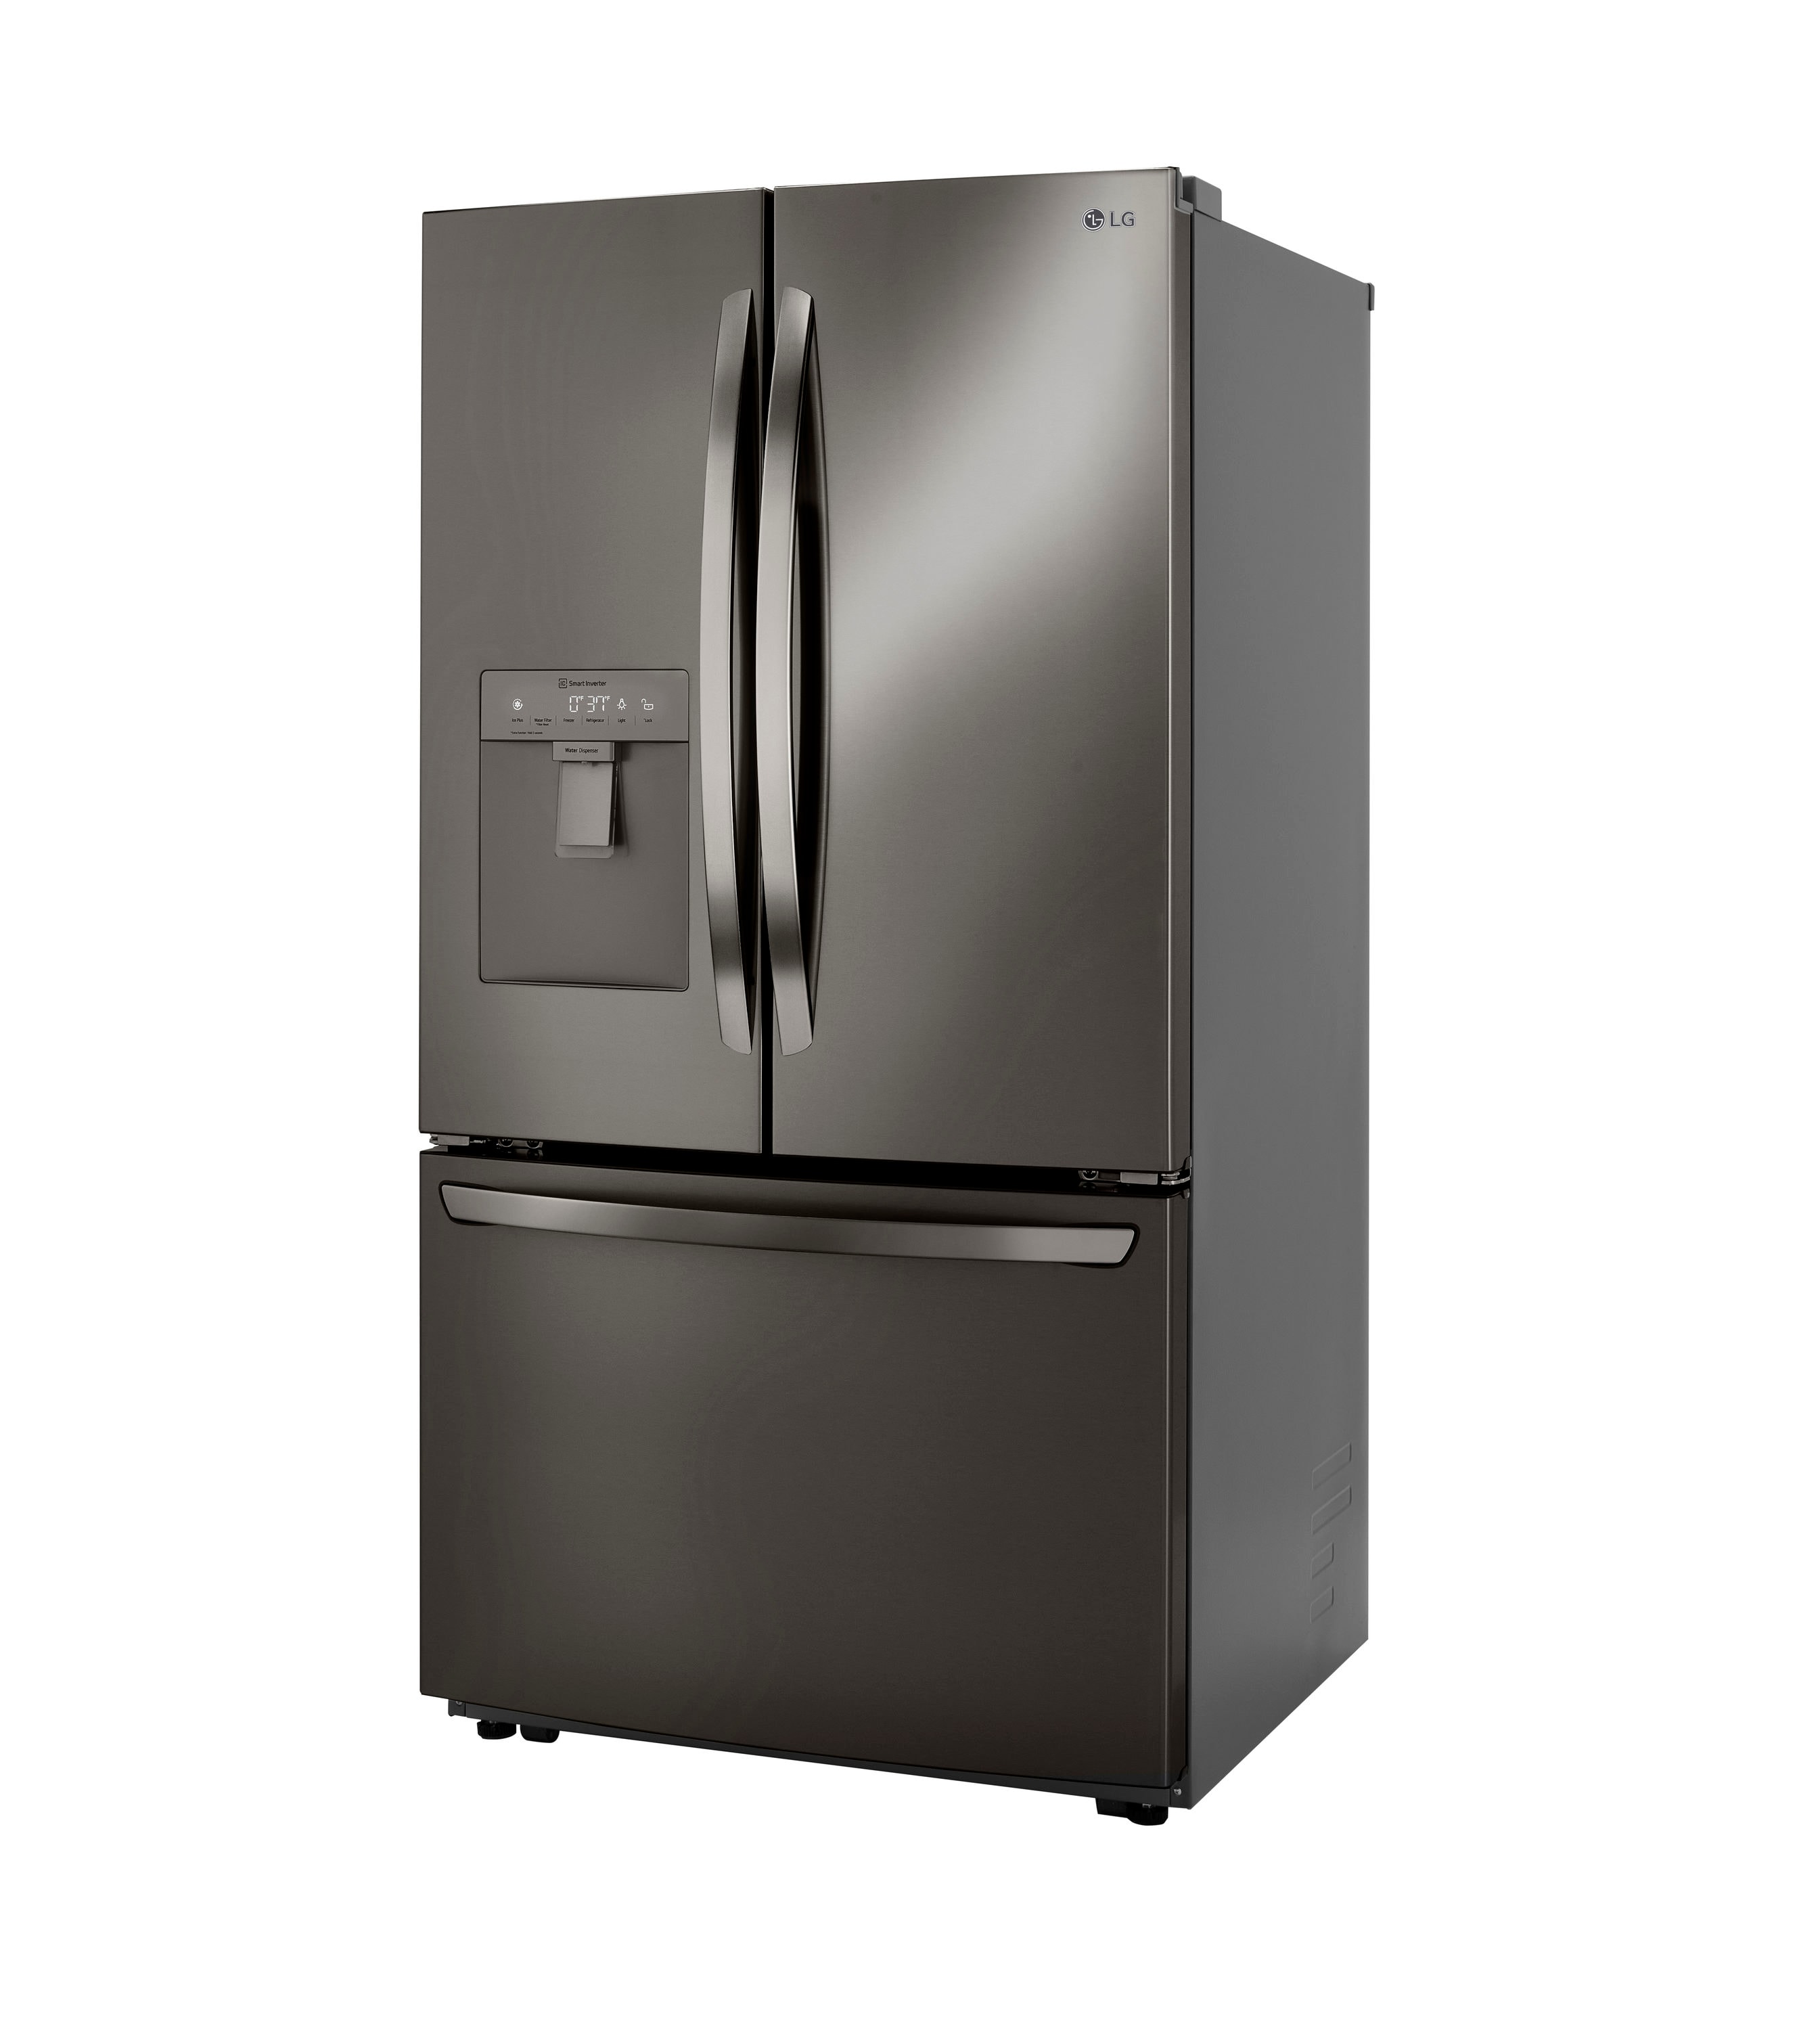 LRFWS2906S by LG - 29 cu ft. French Door Refrigerator with Slim Design  Water Dispenser